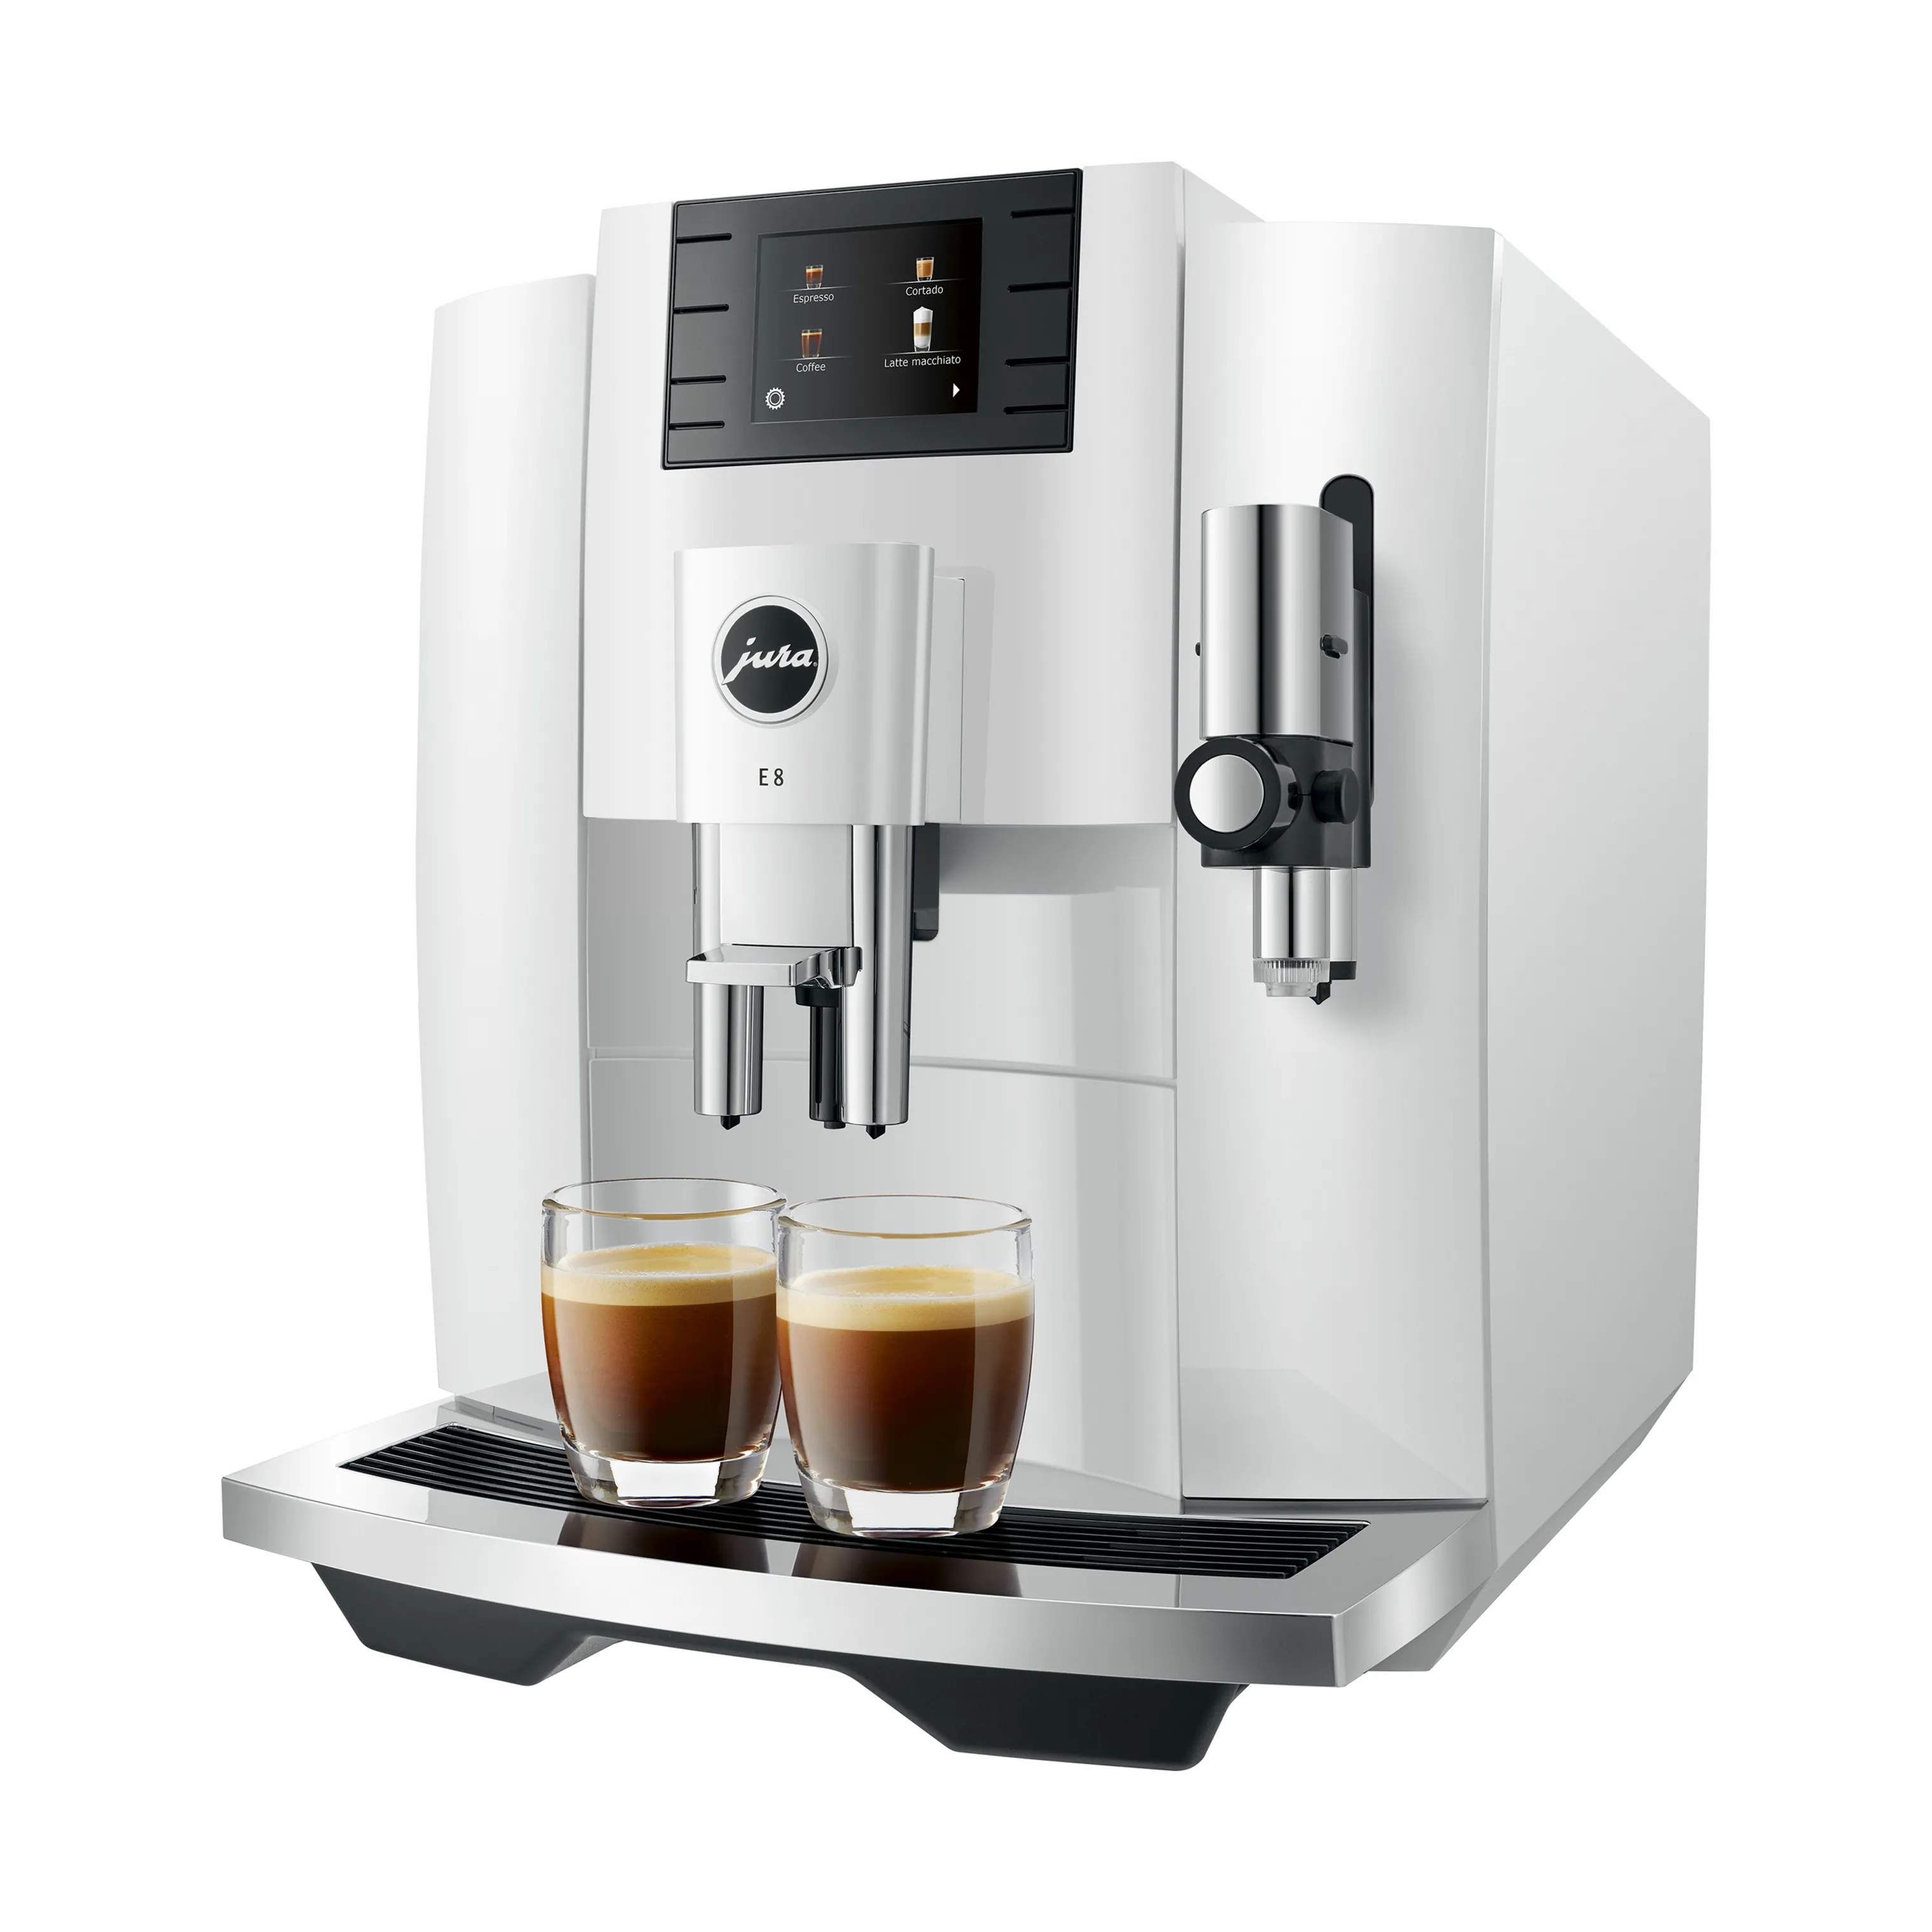 E8 (EB) Kaffemaskine